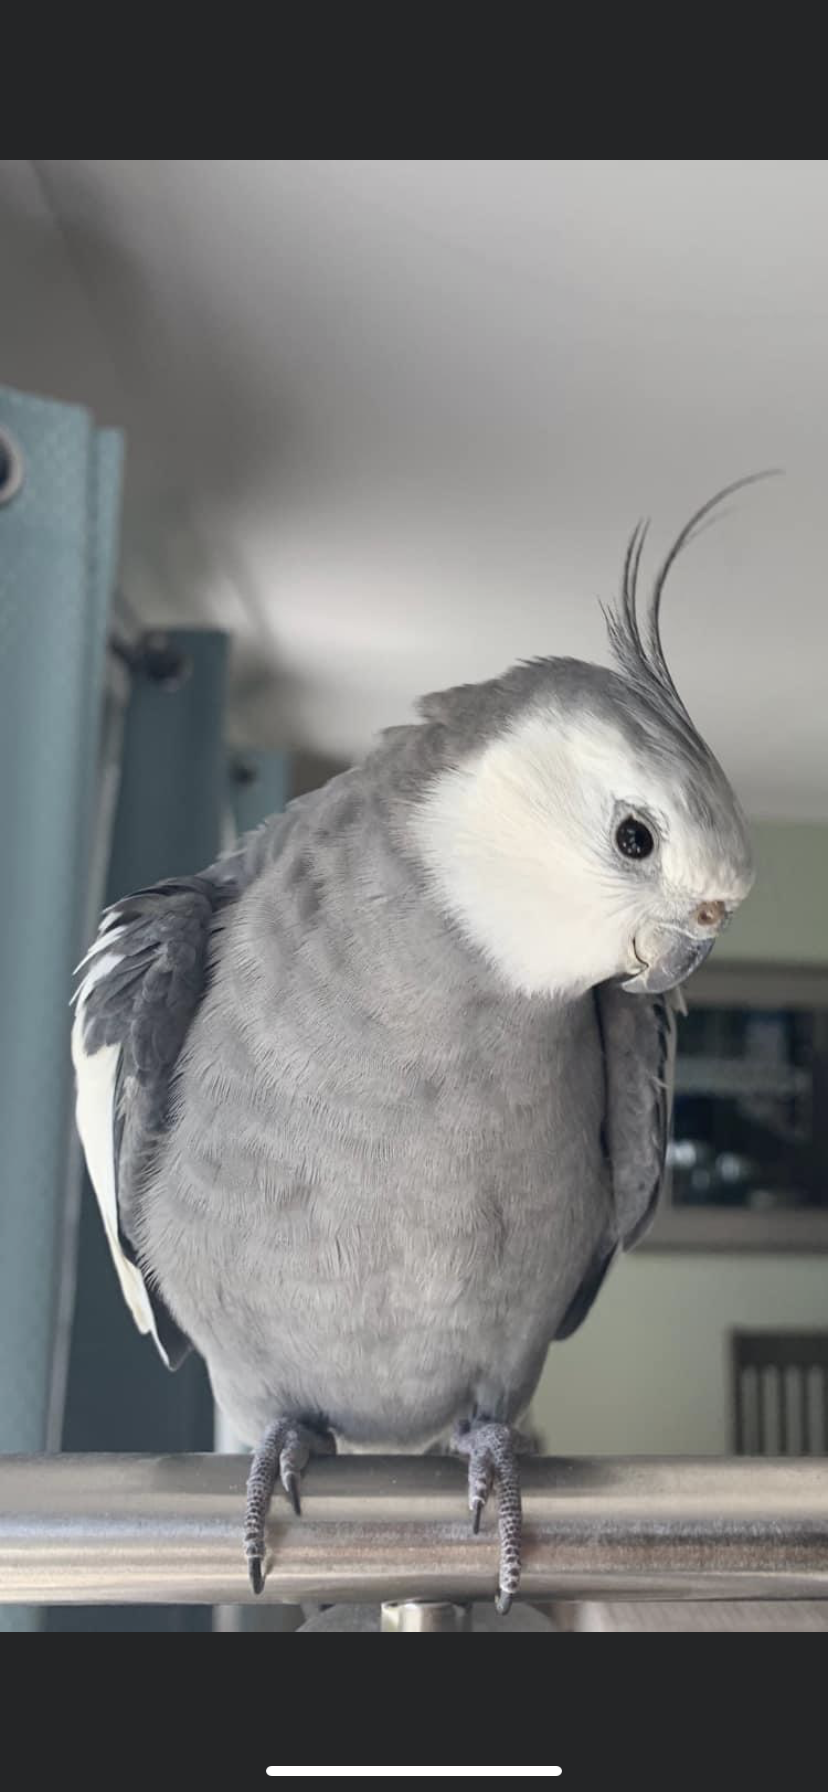 Image of Coco, Lost Bird